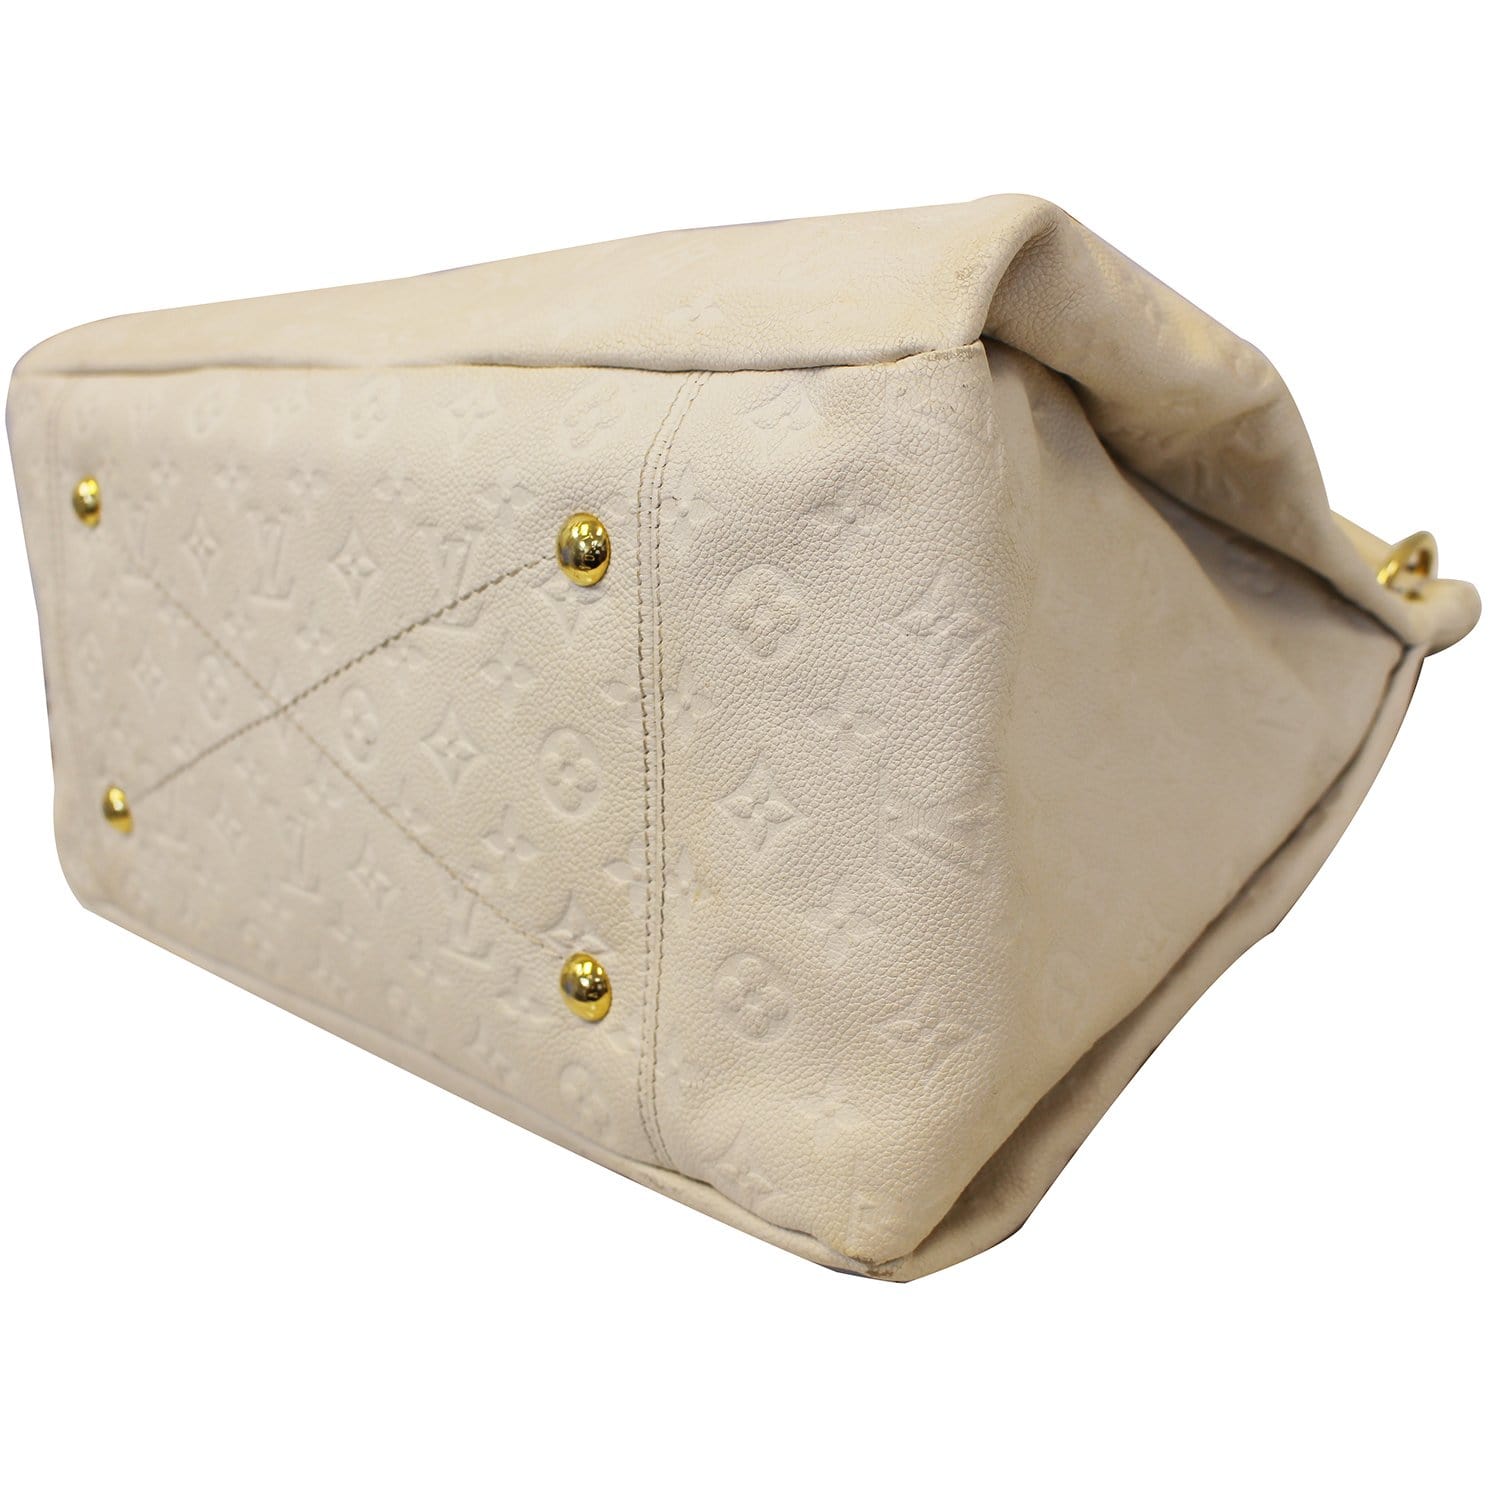 Louis Vuitton - Authenticated Artsy Handbag - Leather Beige Plain for Women, Very Good Condition